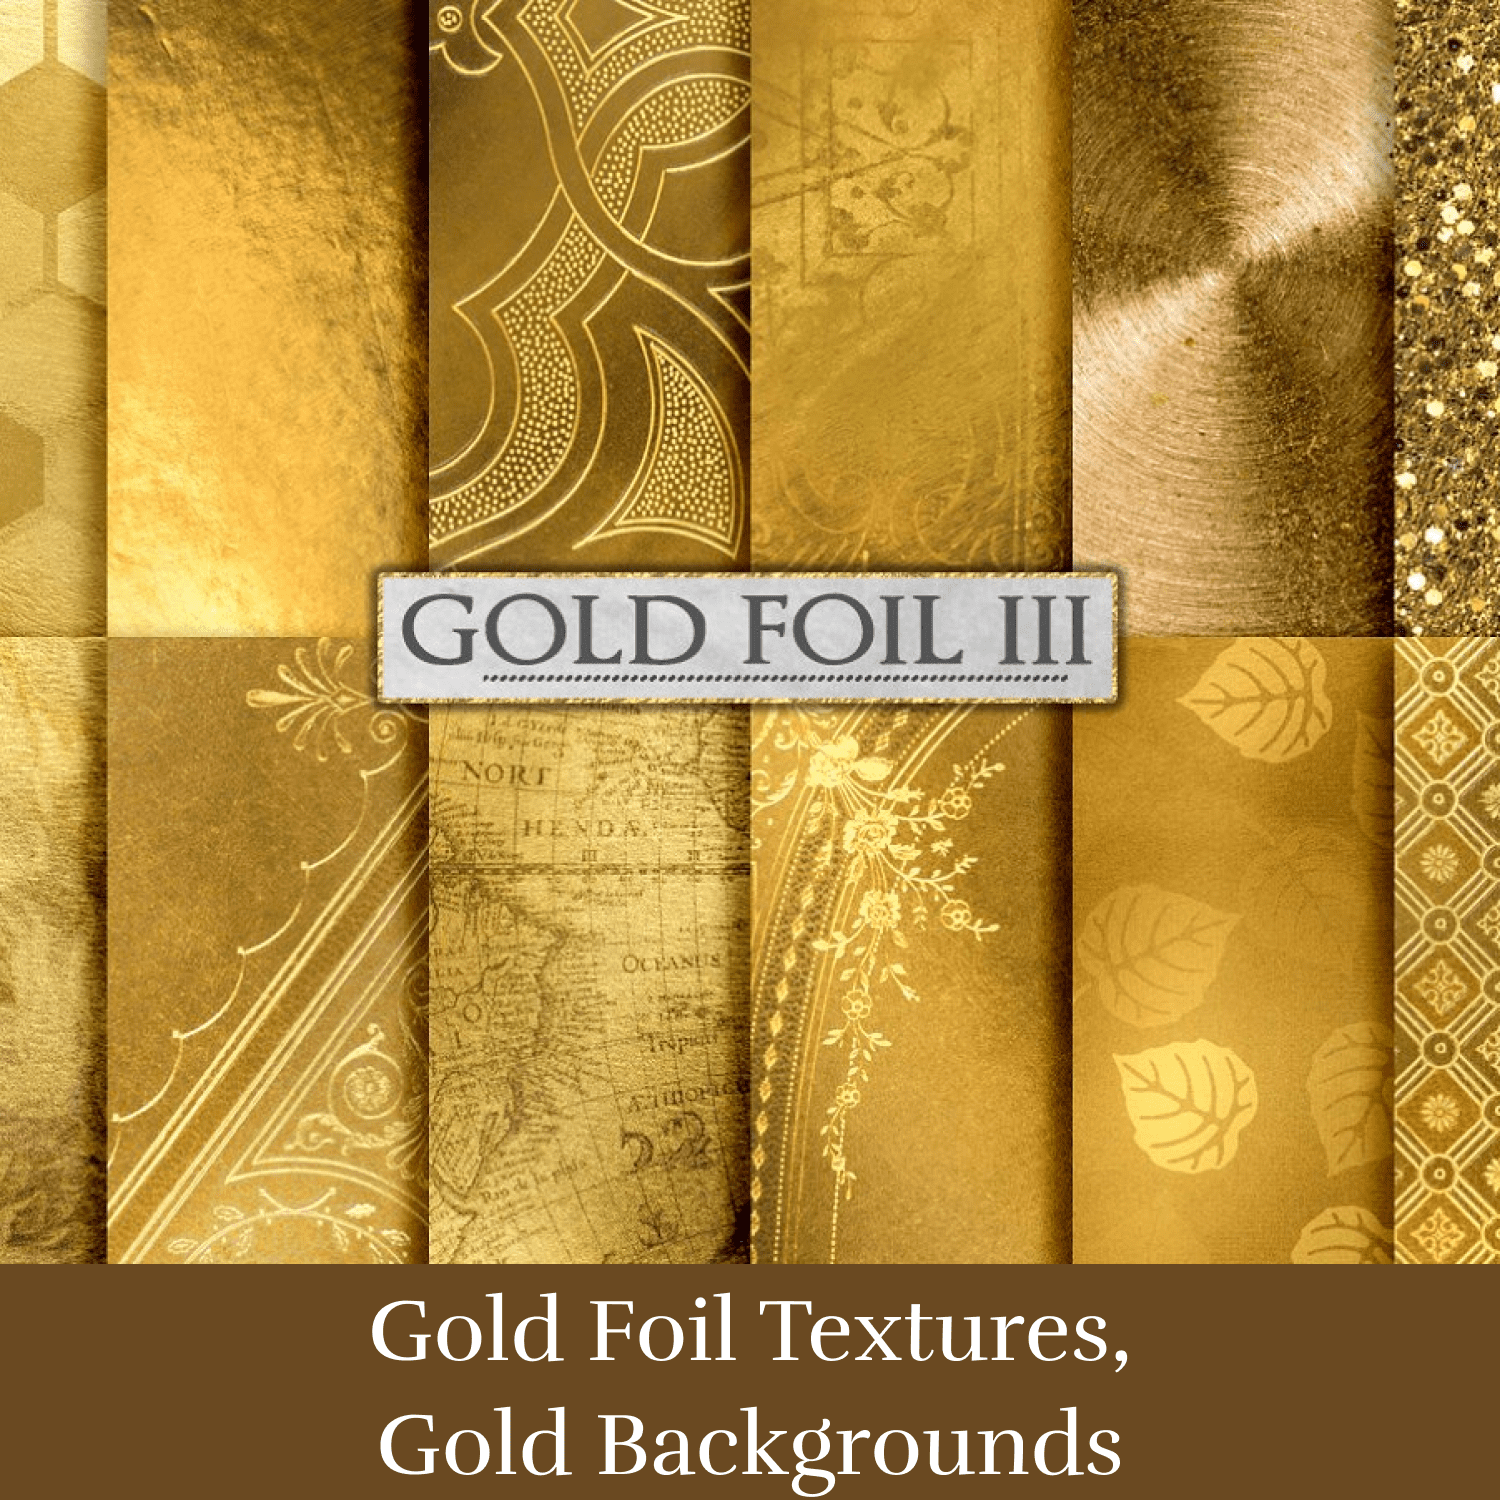 Gold Foil Textures, Gold Backgrounds.